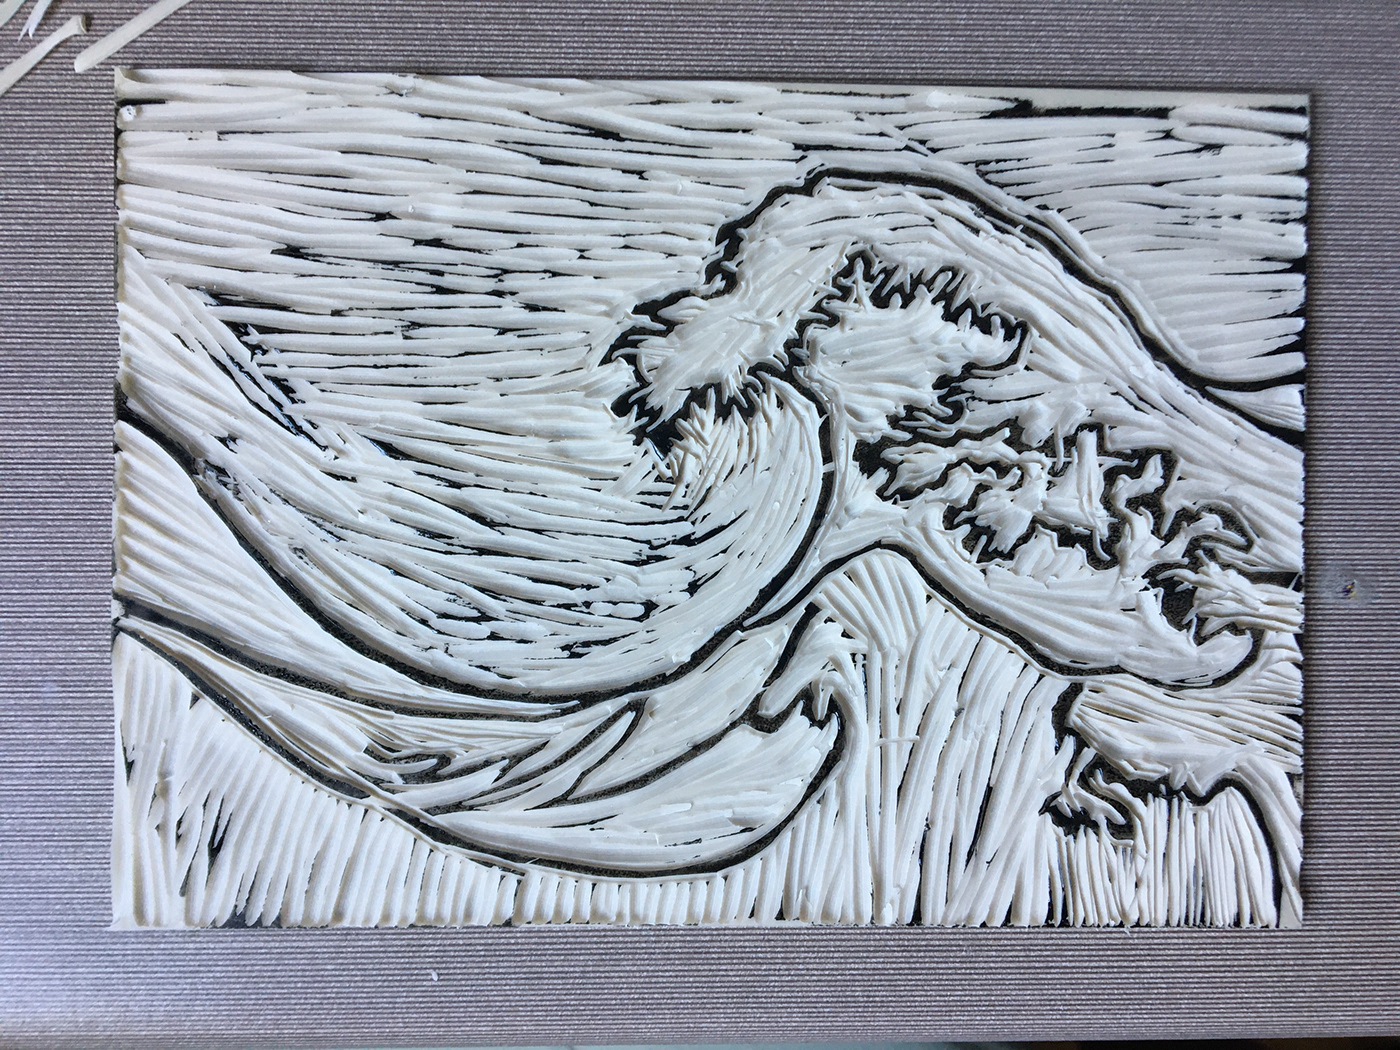 dessin estampe gravure hokusai linogravure vague